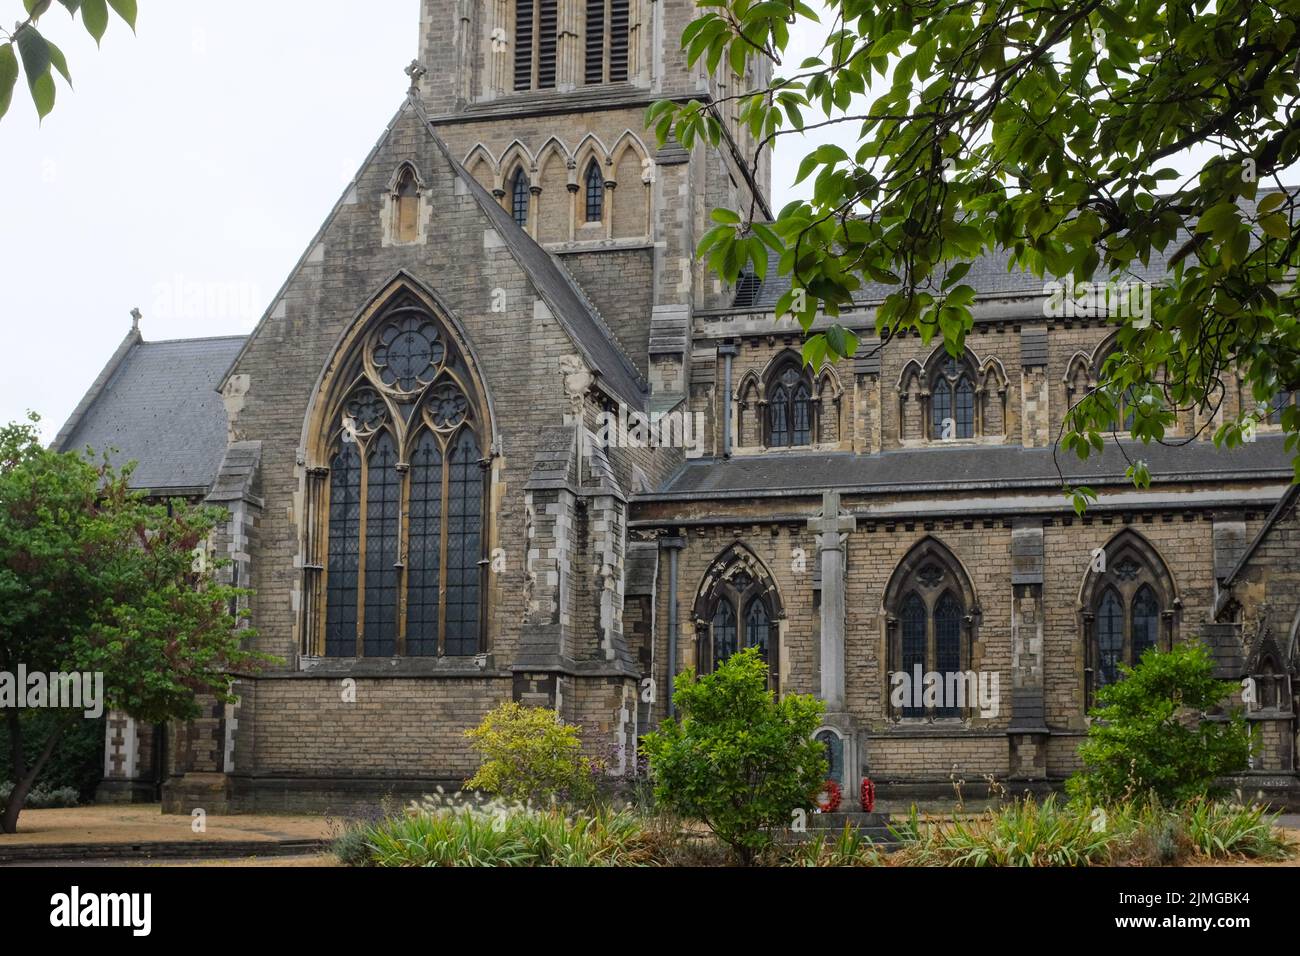 St. Giles Church in Camberwell, London, England. Stock Photo